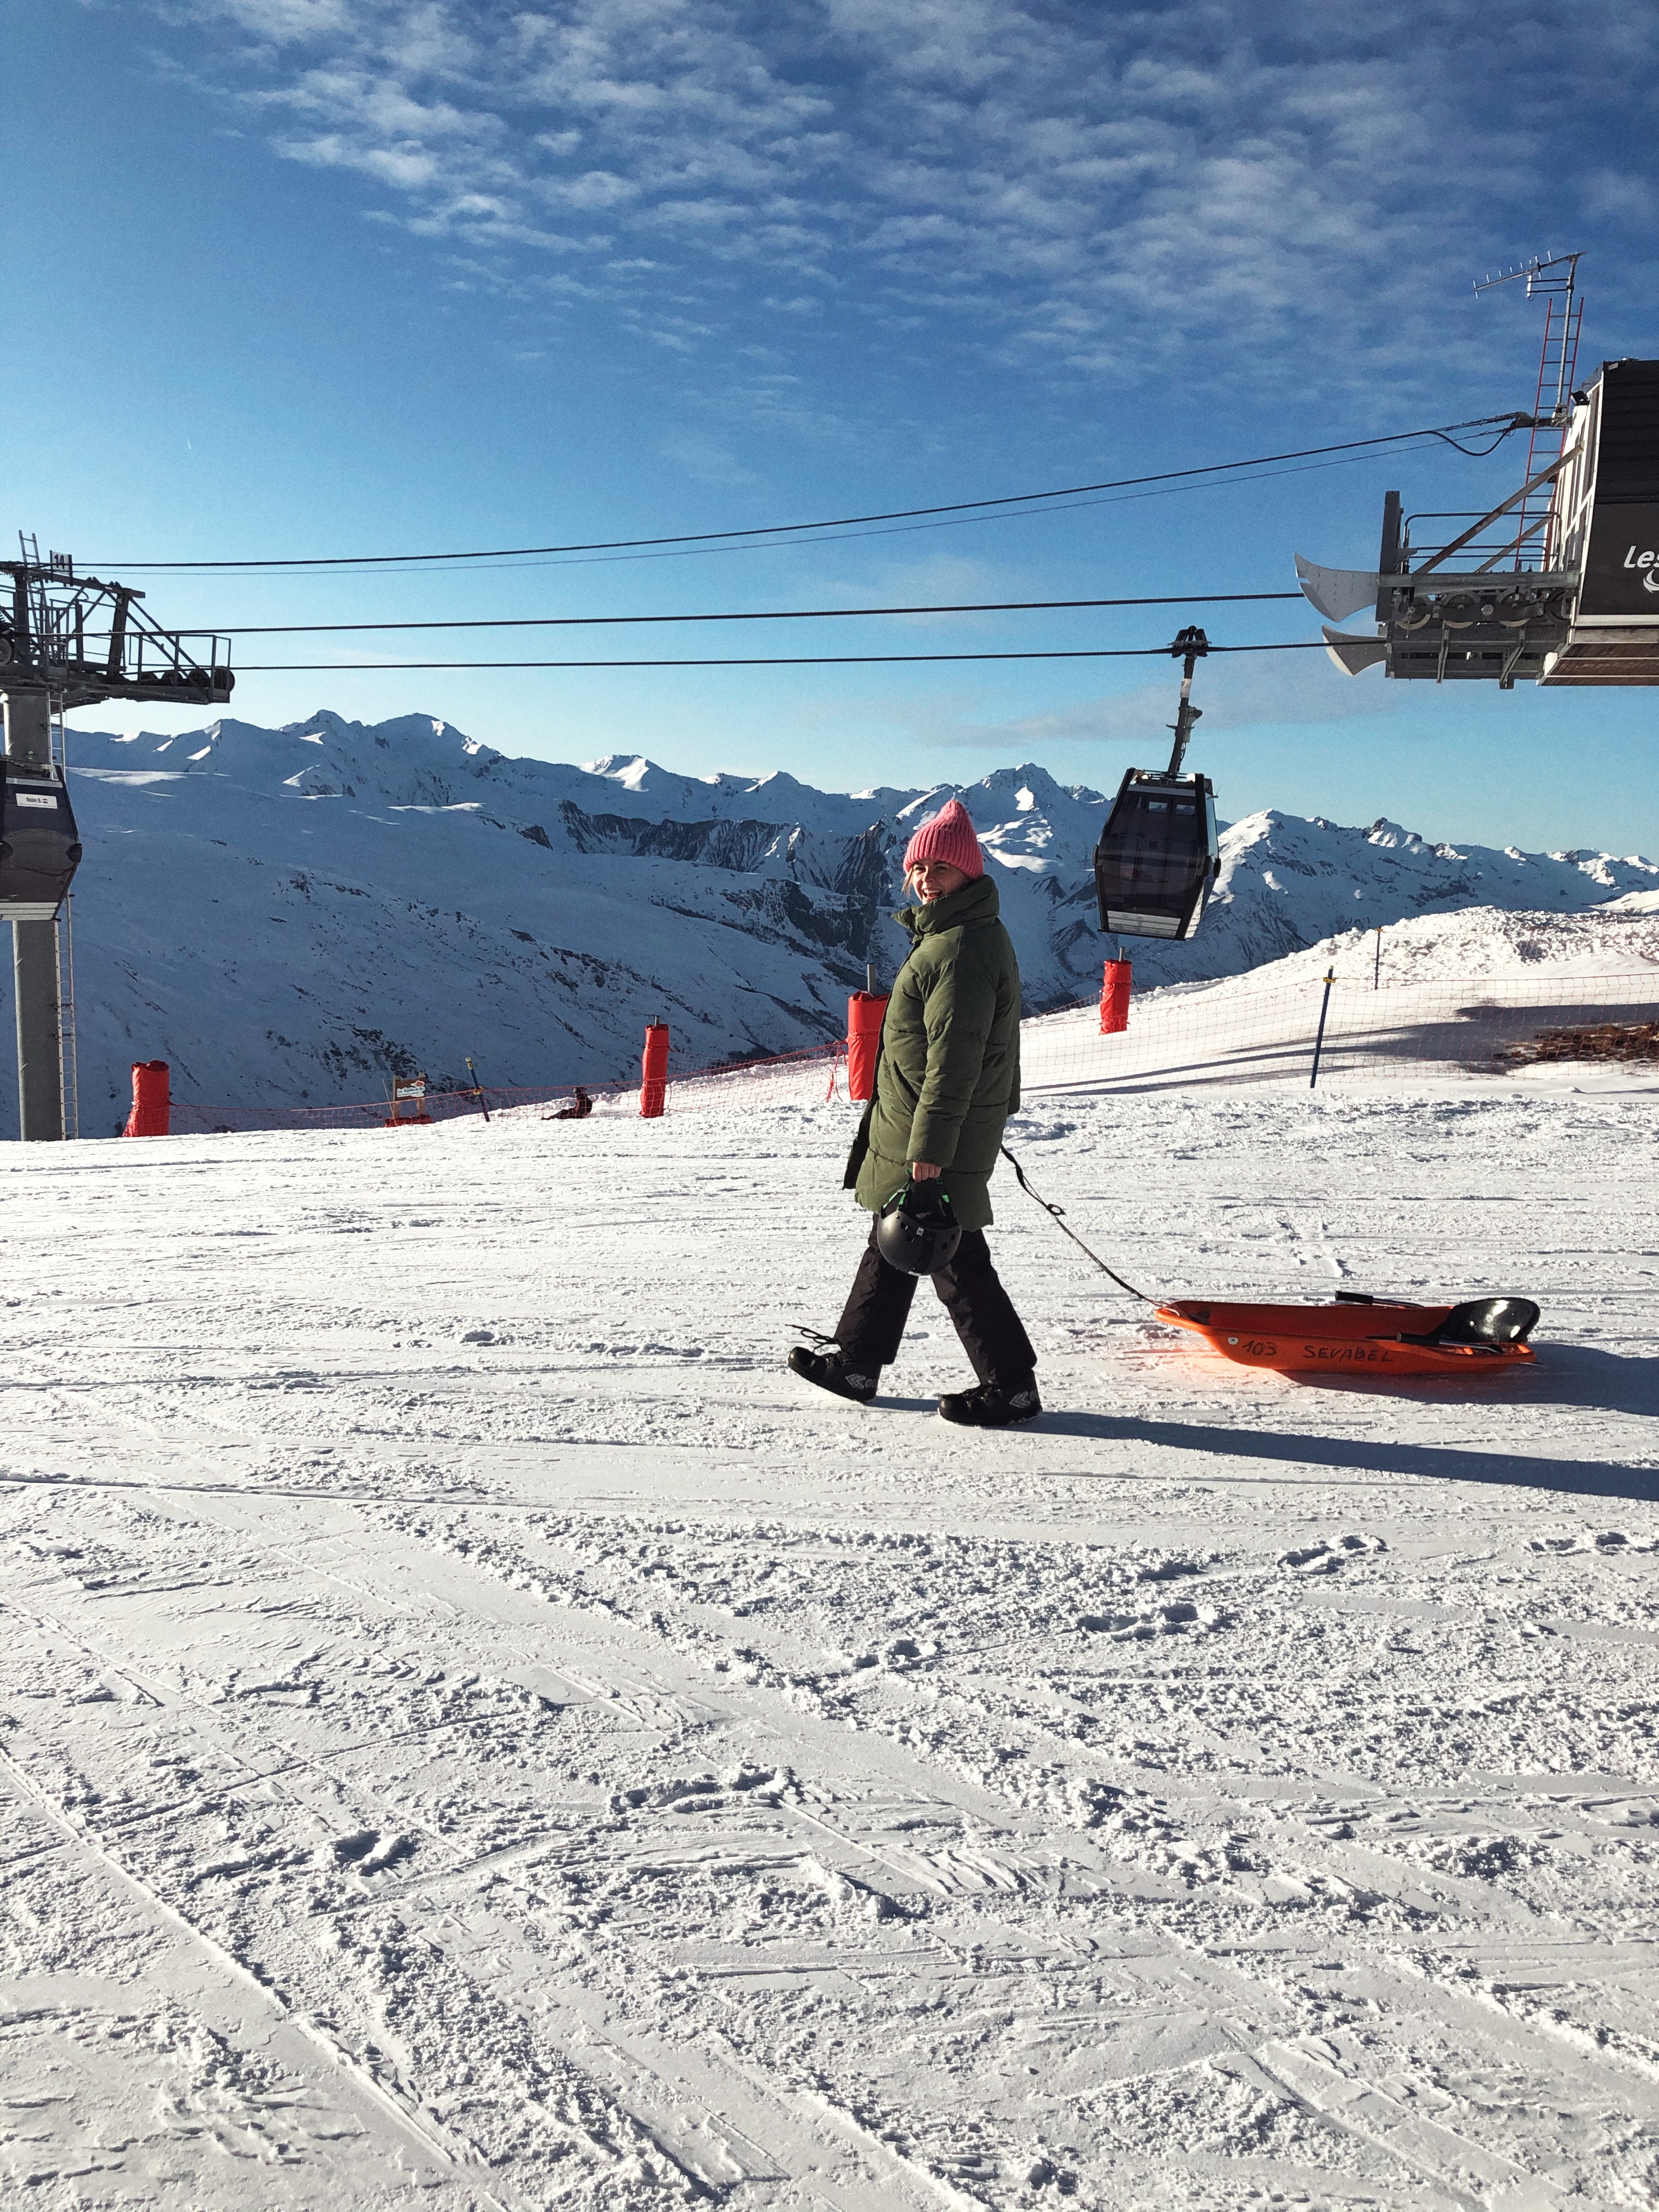 Les Menuires - hotspots Les Menuires - les menuires skigebied - wintersport Les Menuires - resaturants Les Menuires